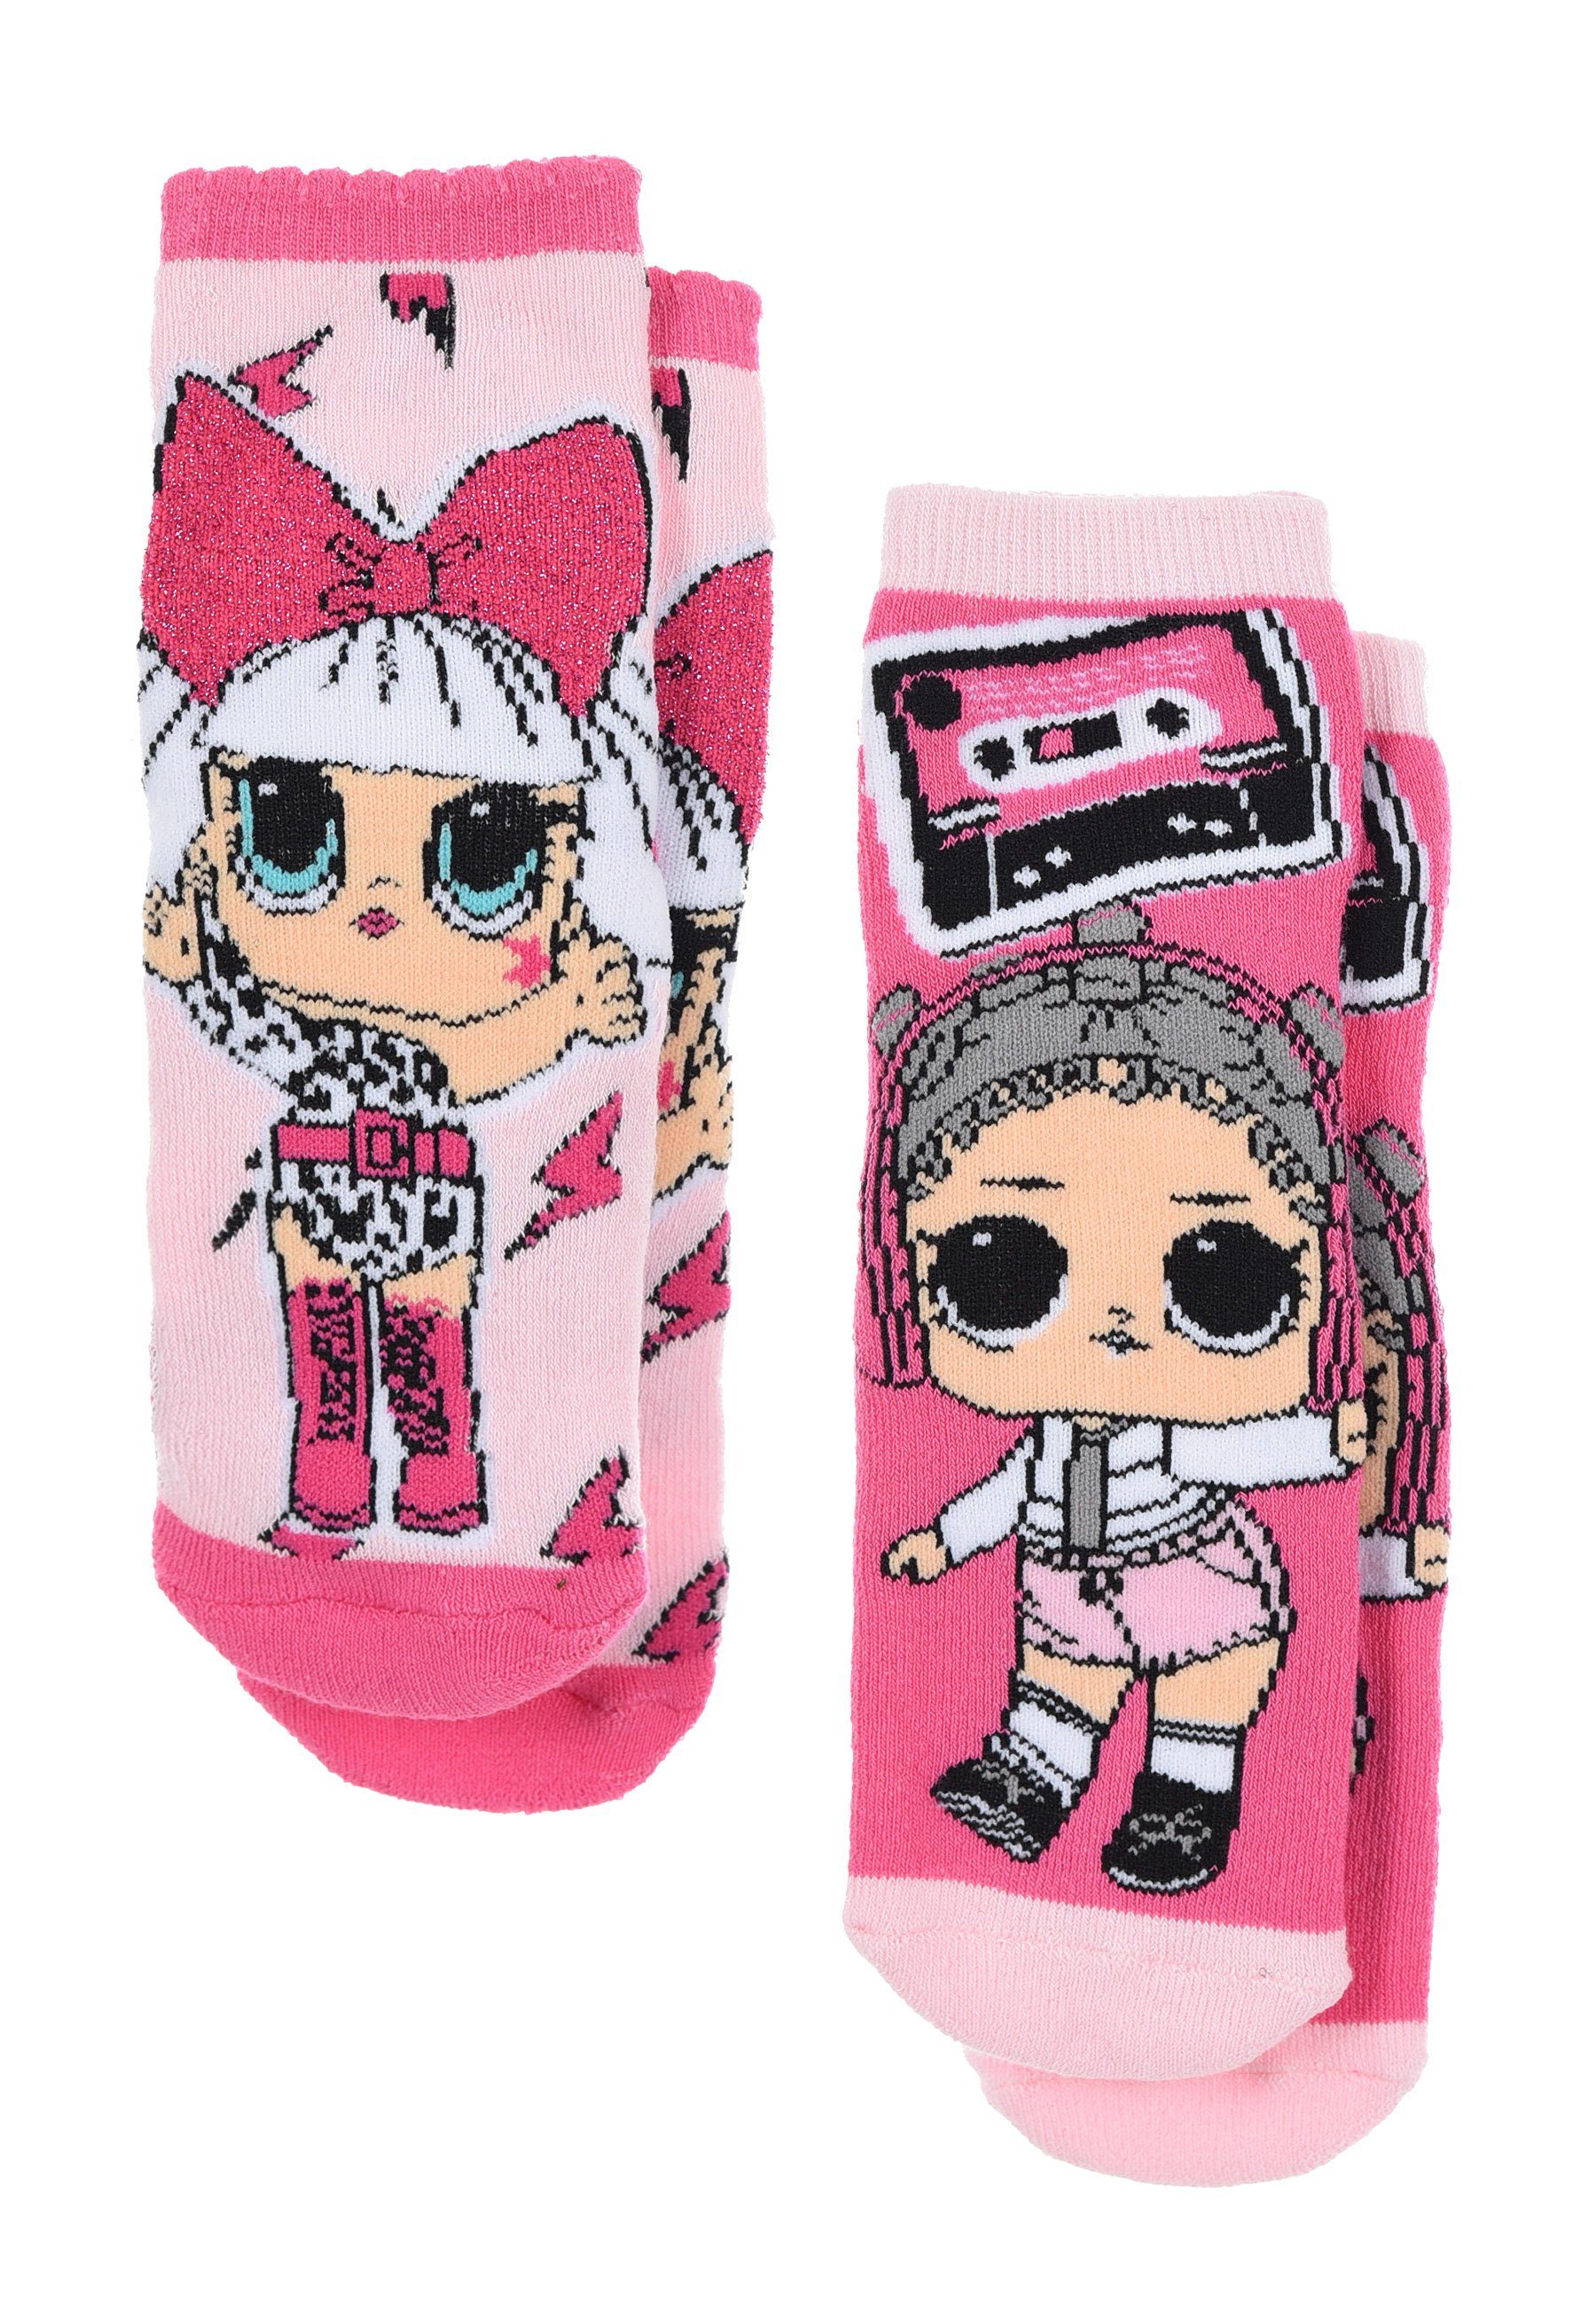 L.O.L. anti-rutsch Noppen Paar Socken Strümpfe Mädchen Gumminoppen ABS-Socken mit (2-Paar) 2 Stopper-Socken Kinder SURPRISE!